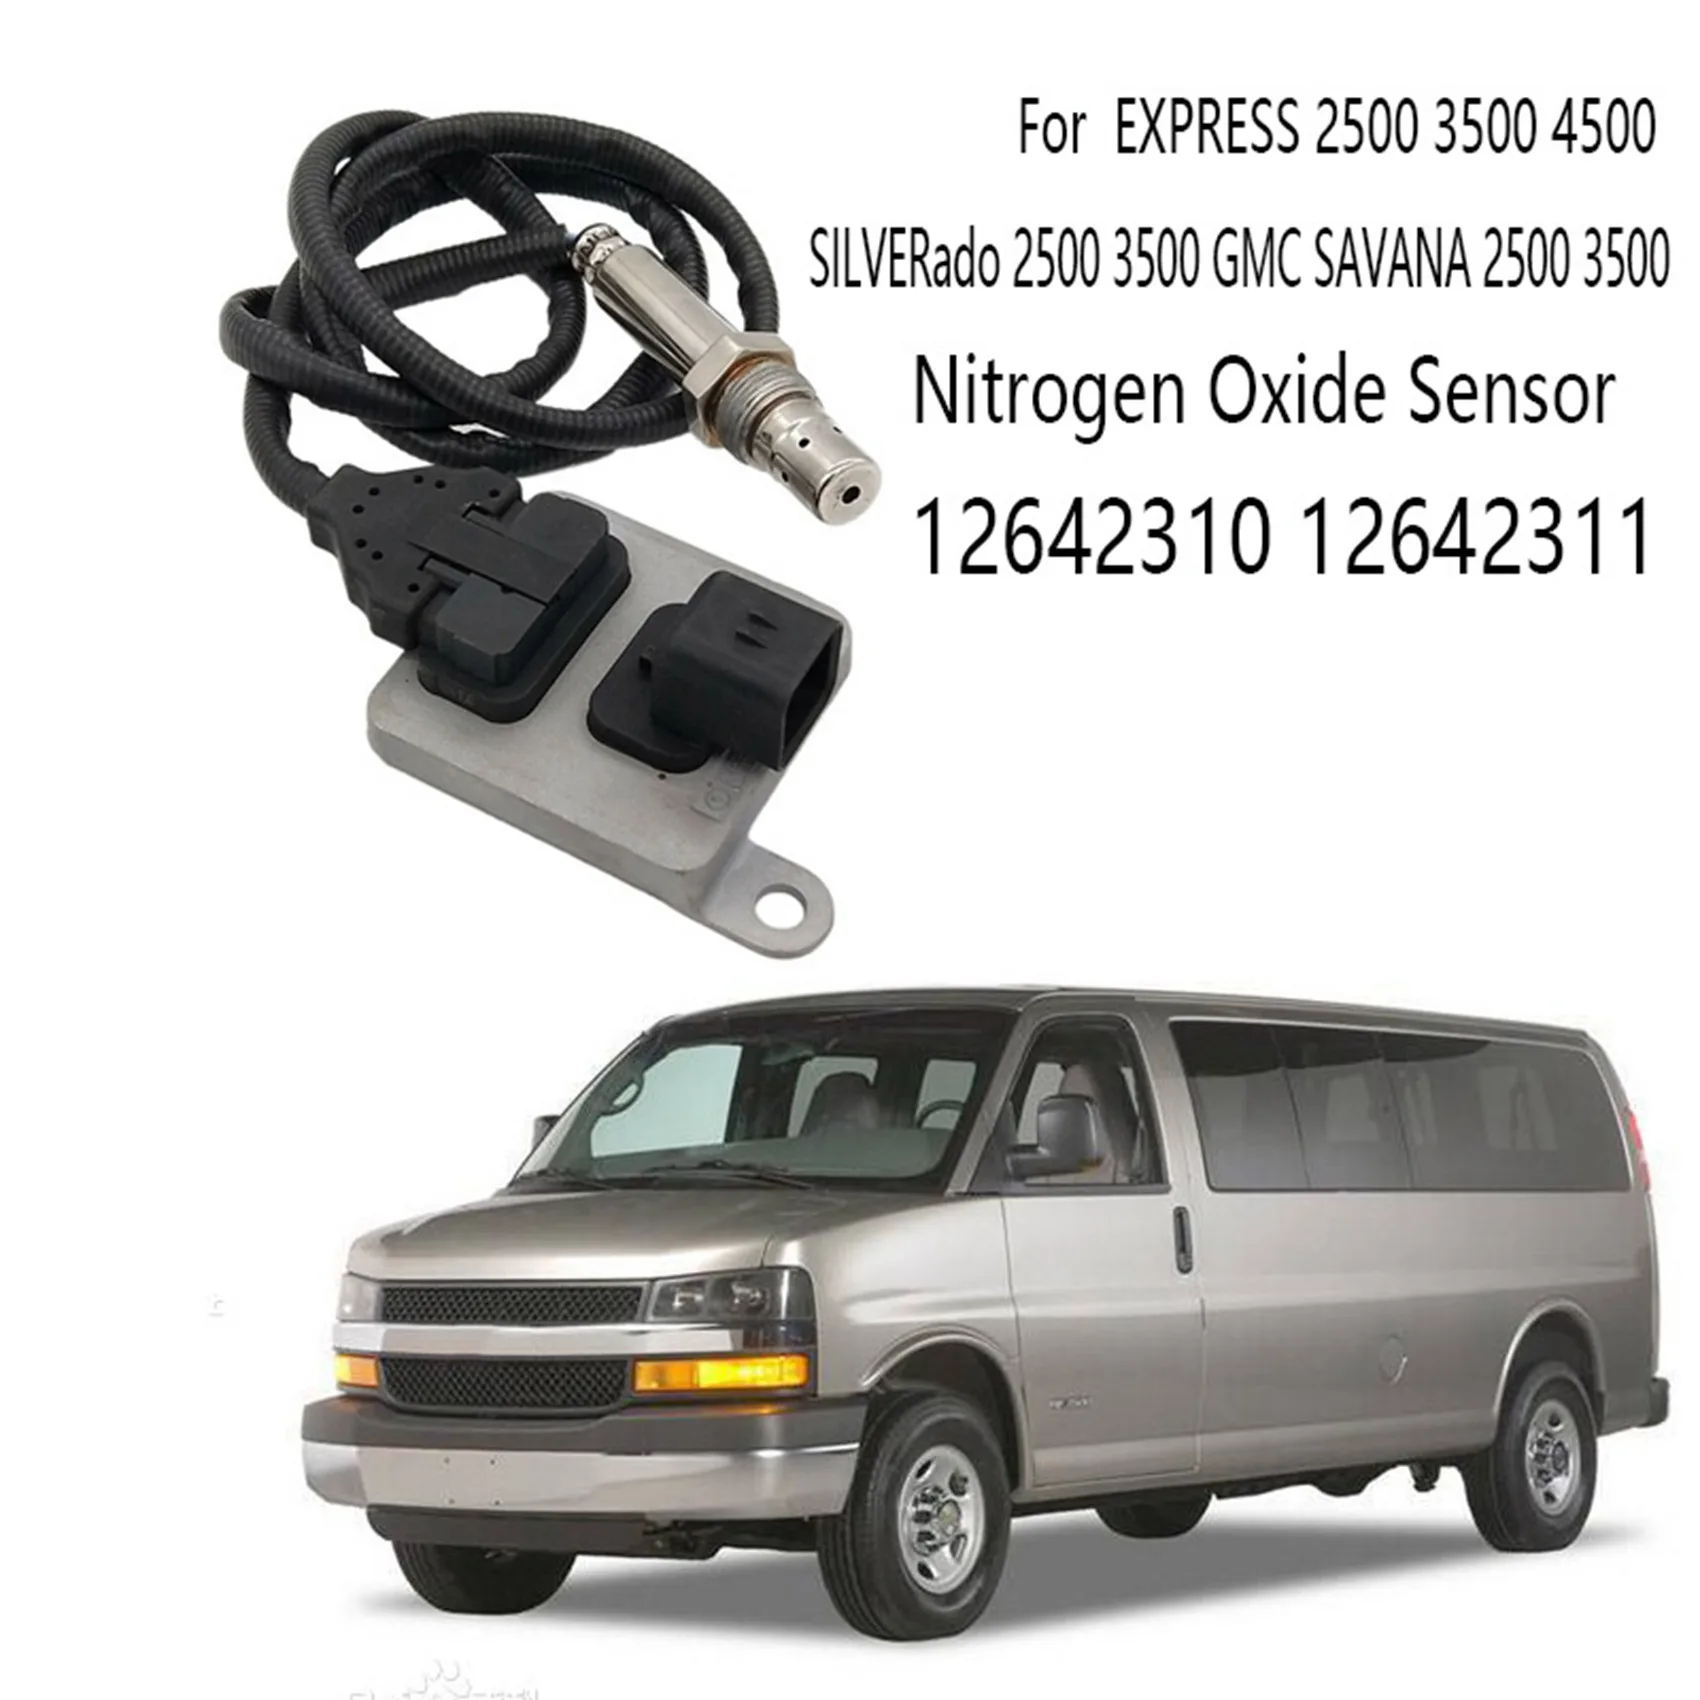 

12642310 12642311 Nox Nitrogen Oxide Sensor For Chevrolet EXPRESS 2500 3500 4500 SILVERADO 2500 3500 GMC SAVANA 2500